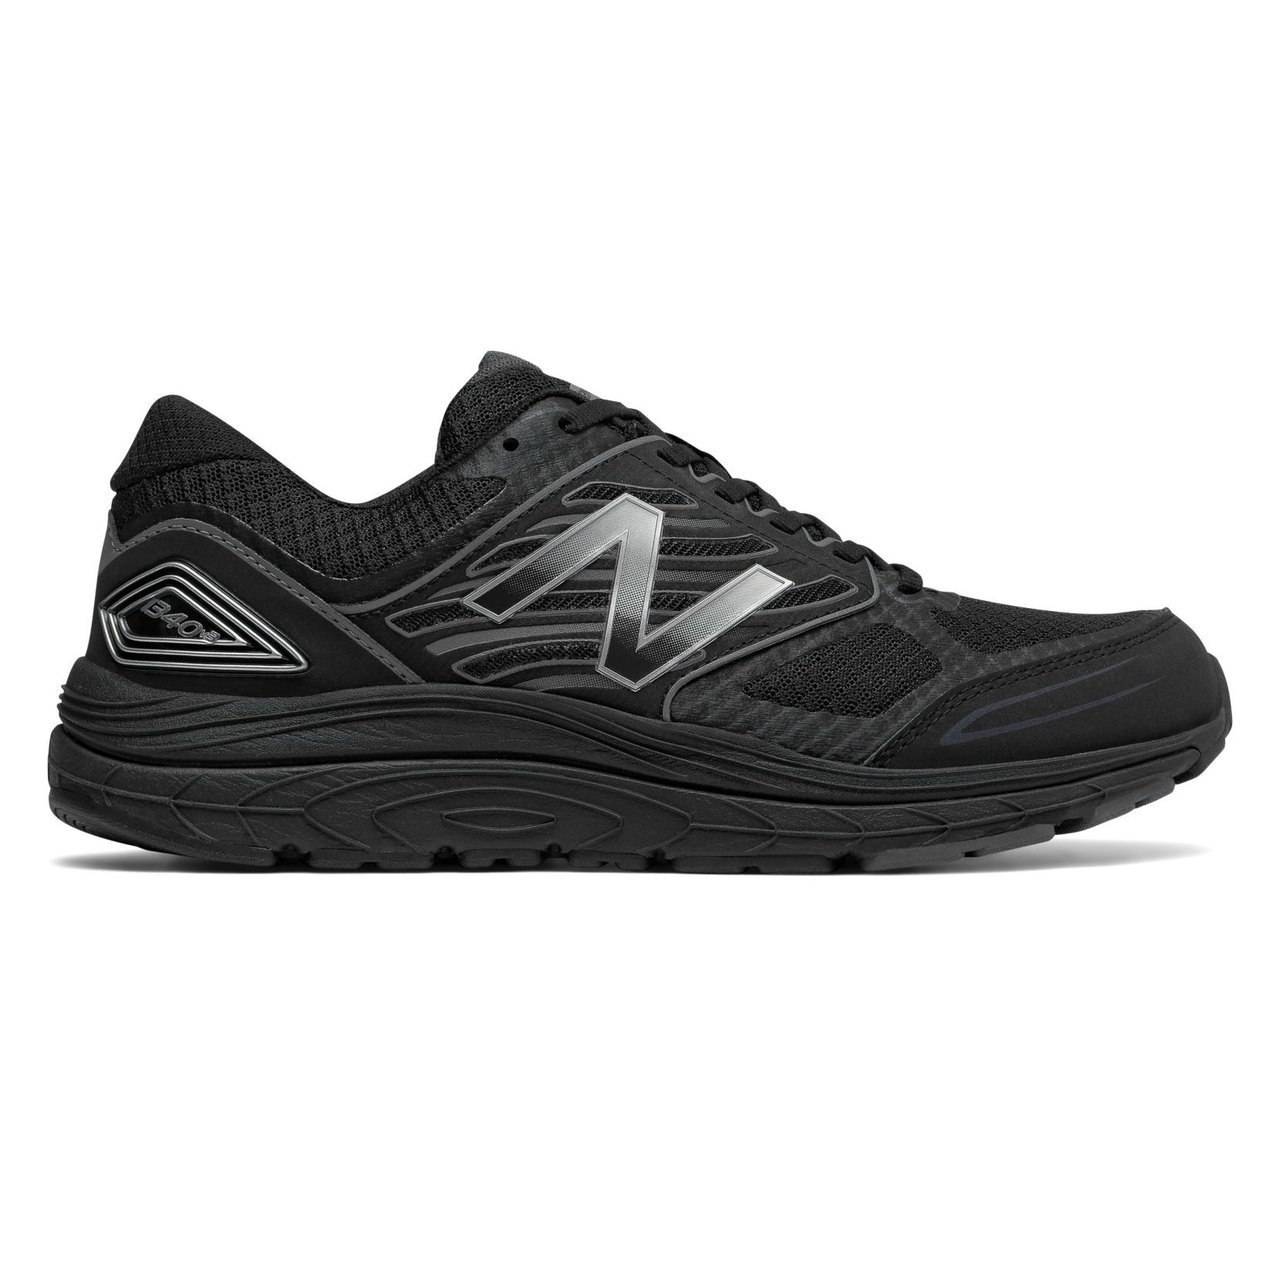 New Balance 1340v3 Men's Running - Black